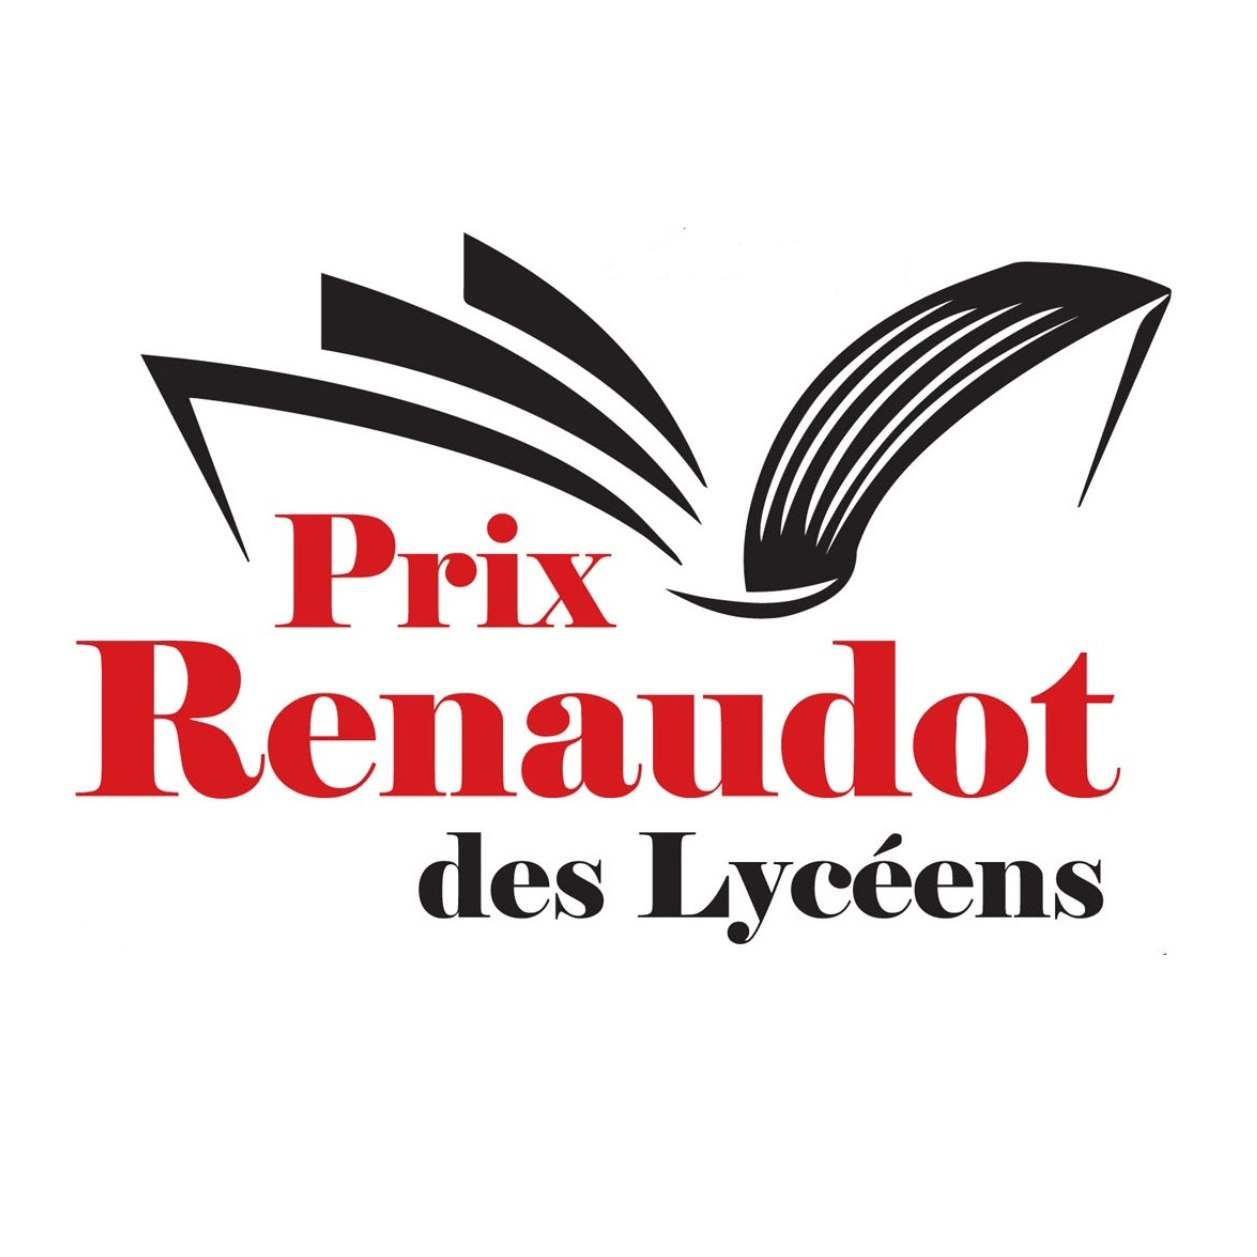 Prix Renaudot des lycéens